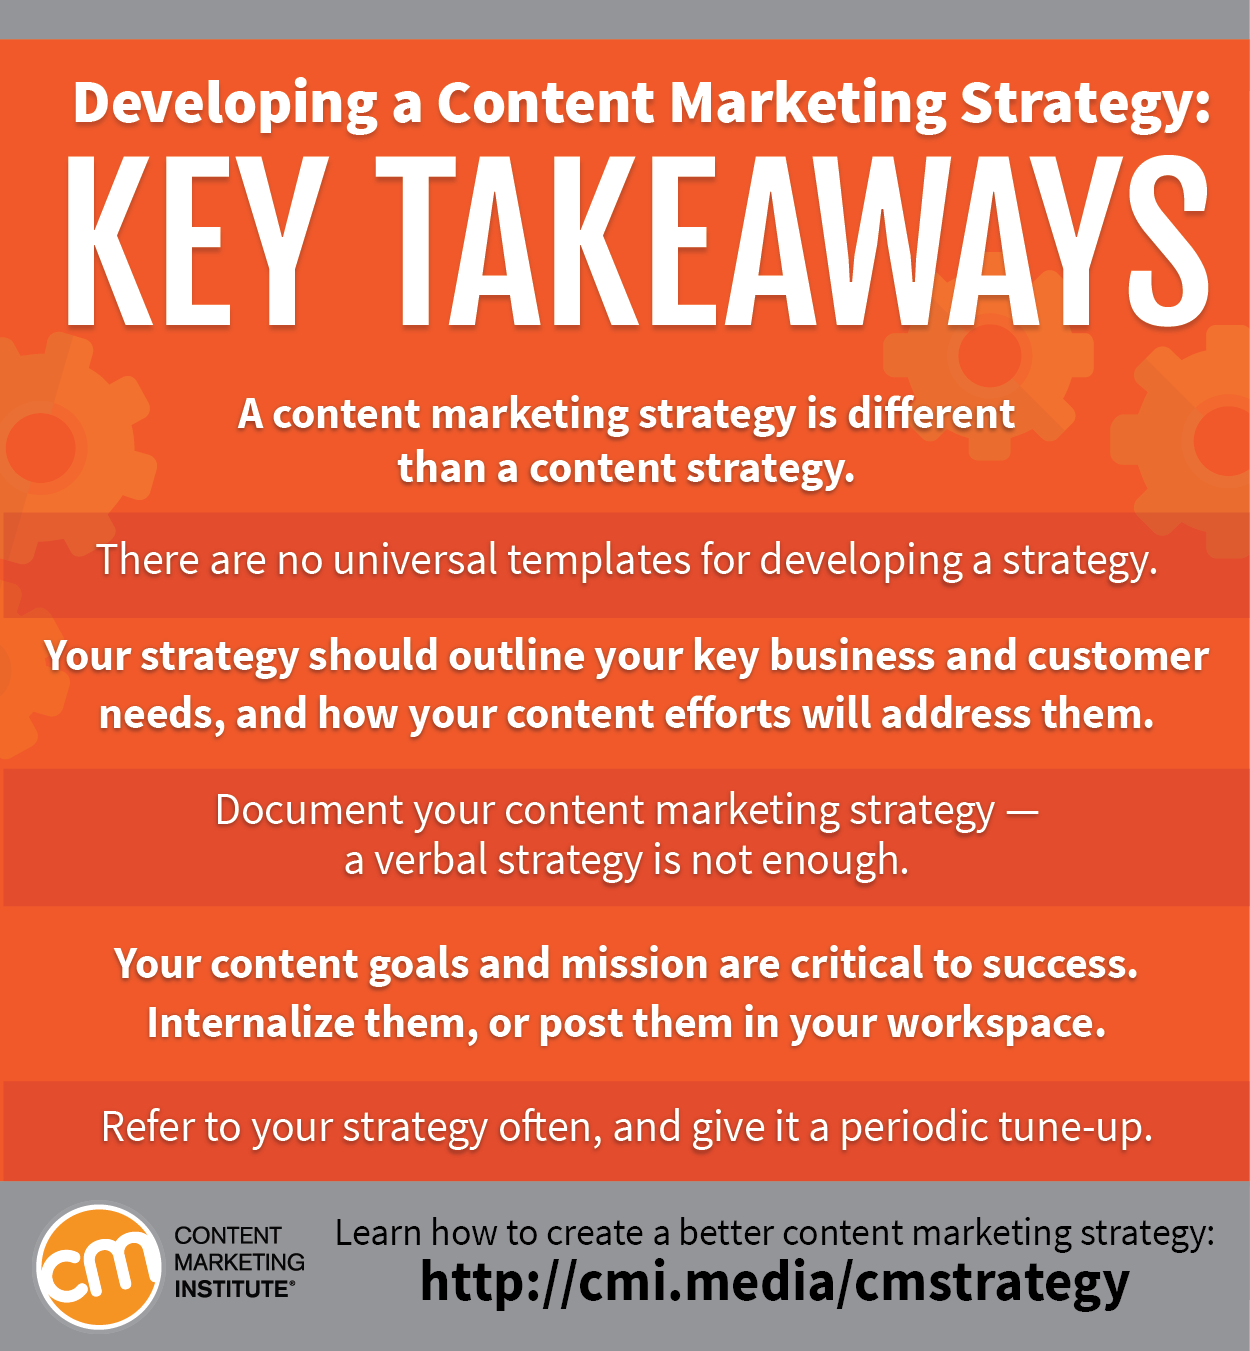 CMI content marketing strategy